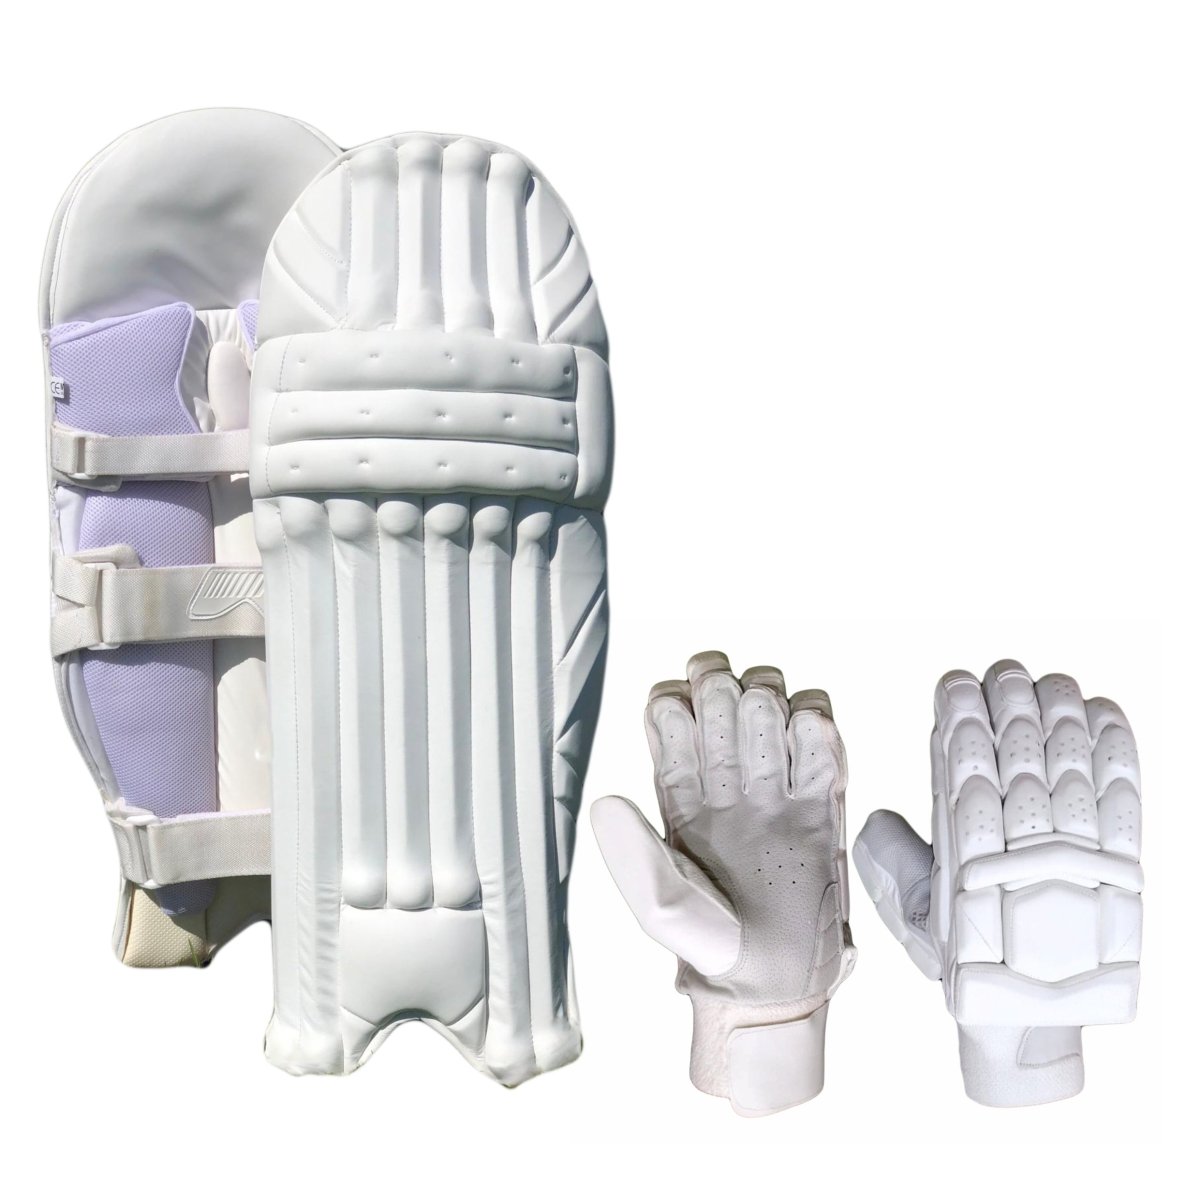 Cricket Batting Gloves BL-09 + Clean Skin Batting Pads Combo - Acrux Sports